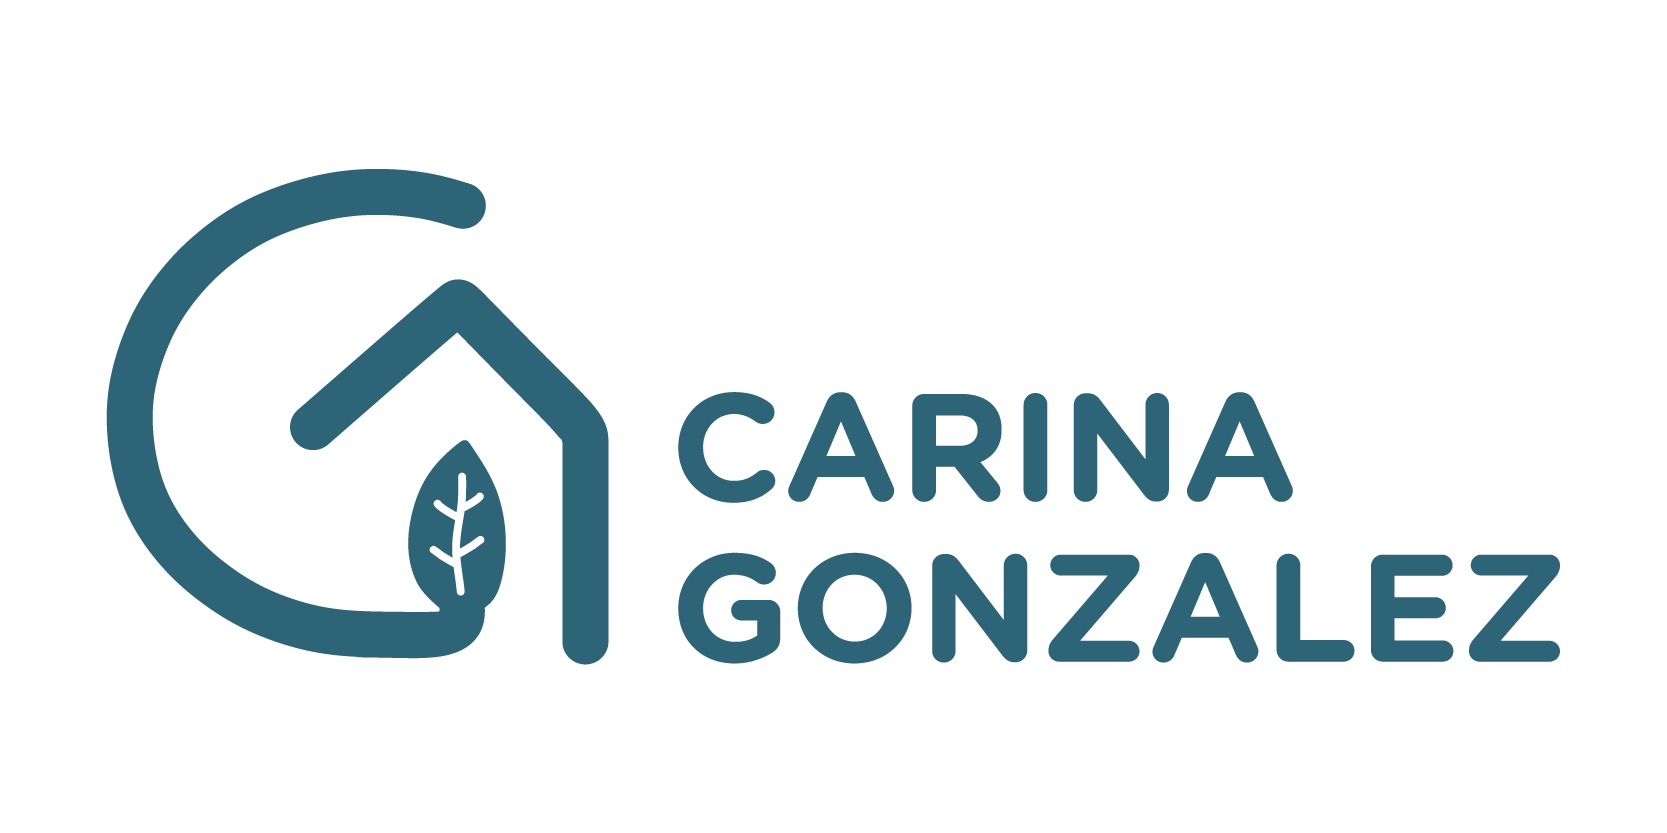 Carina Gonzalez - Servicios Inmobiliarios